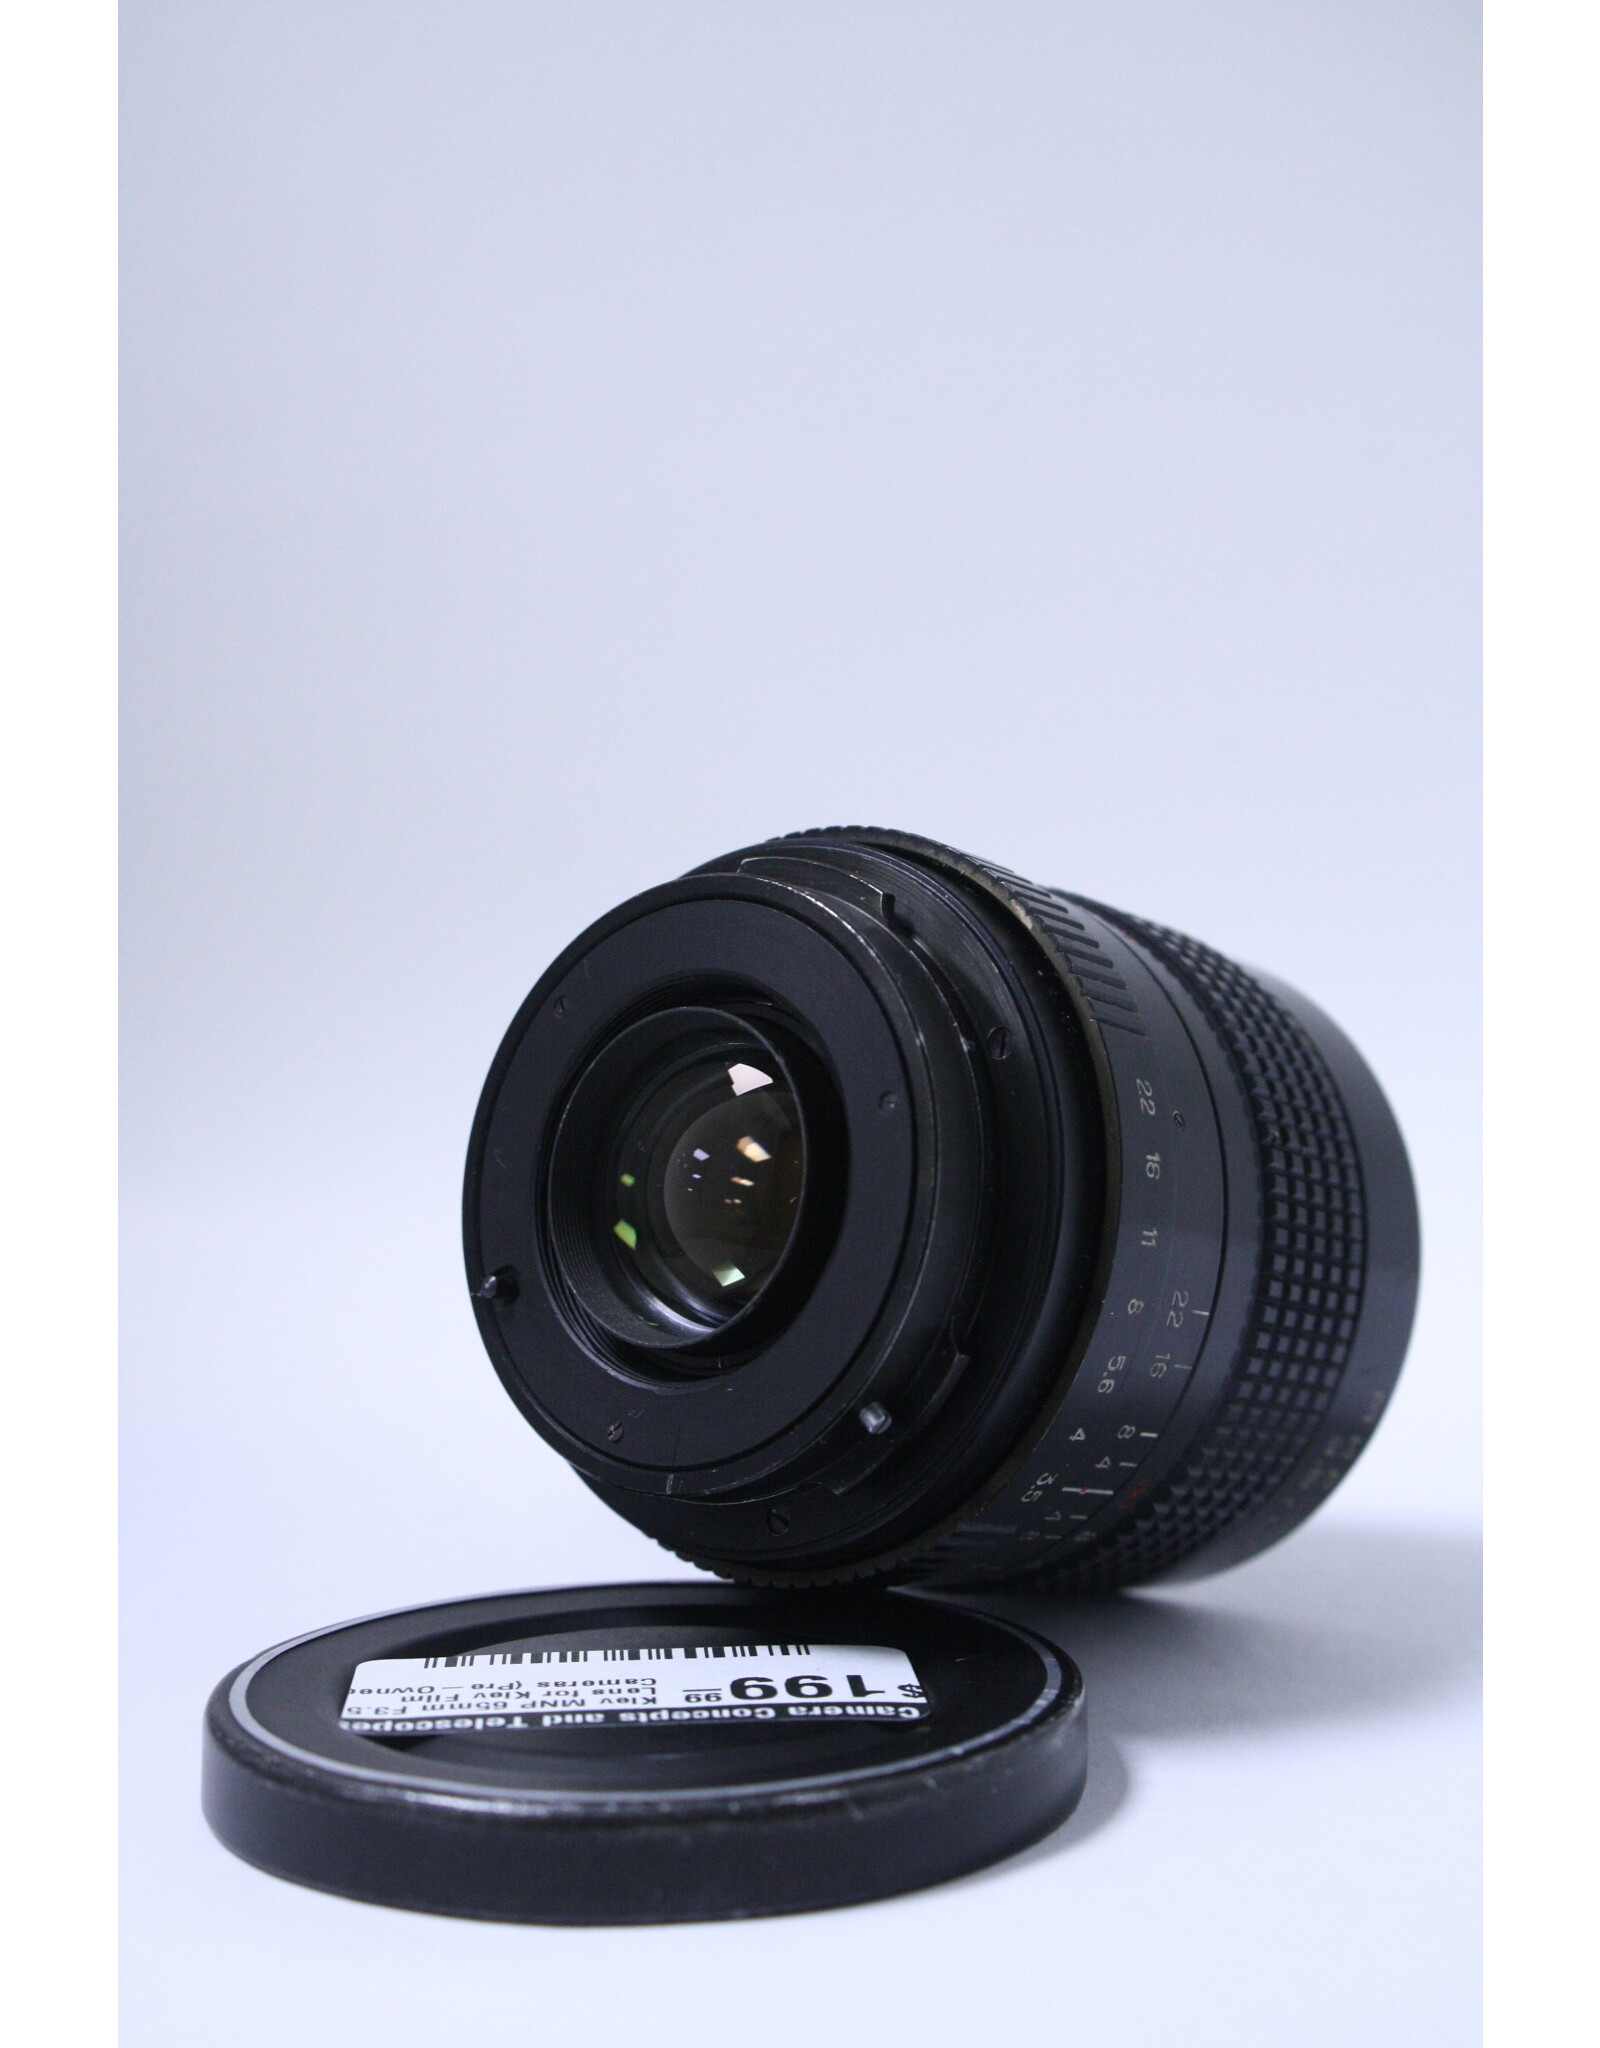 Kiev Kiev MNP 65mm F3.5 Lens for Kiev Film Cameras (Pre-Owned)